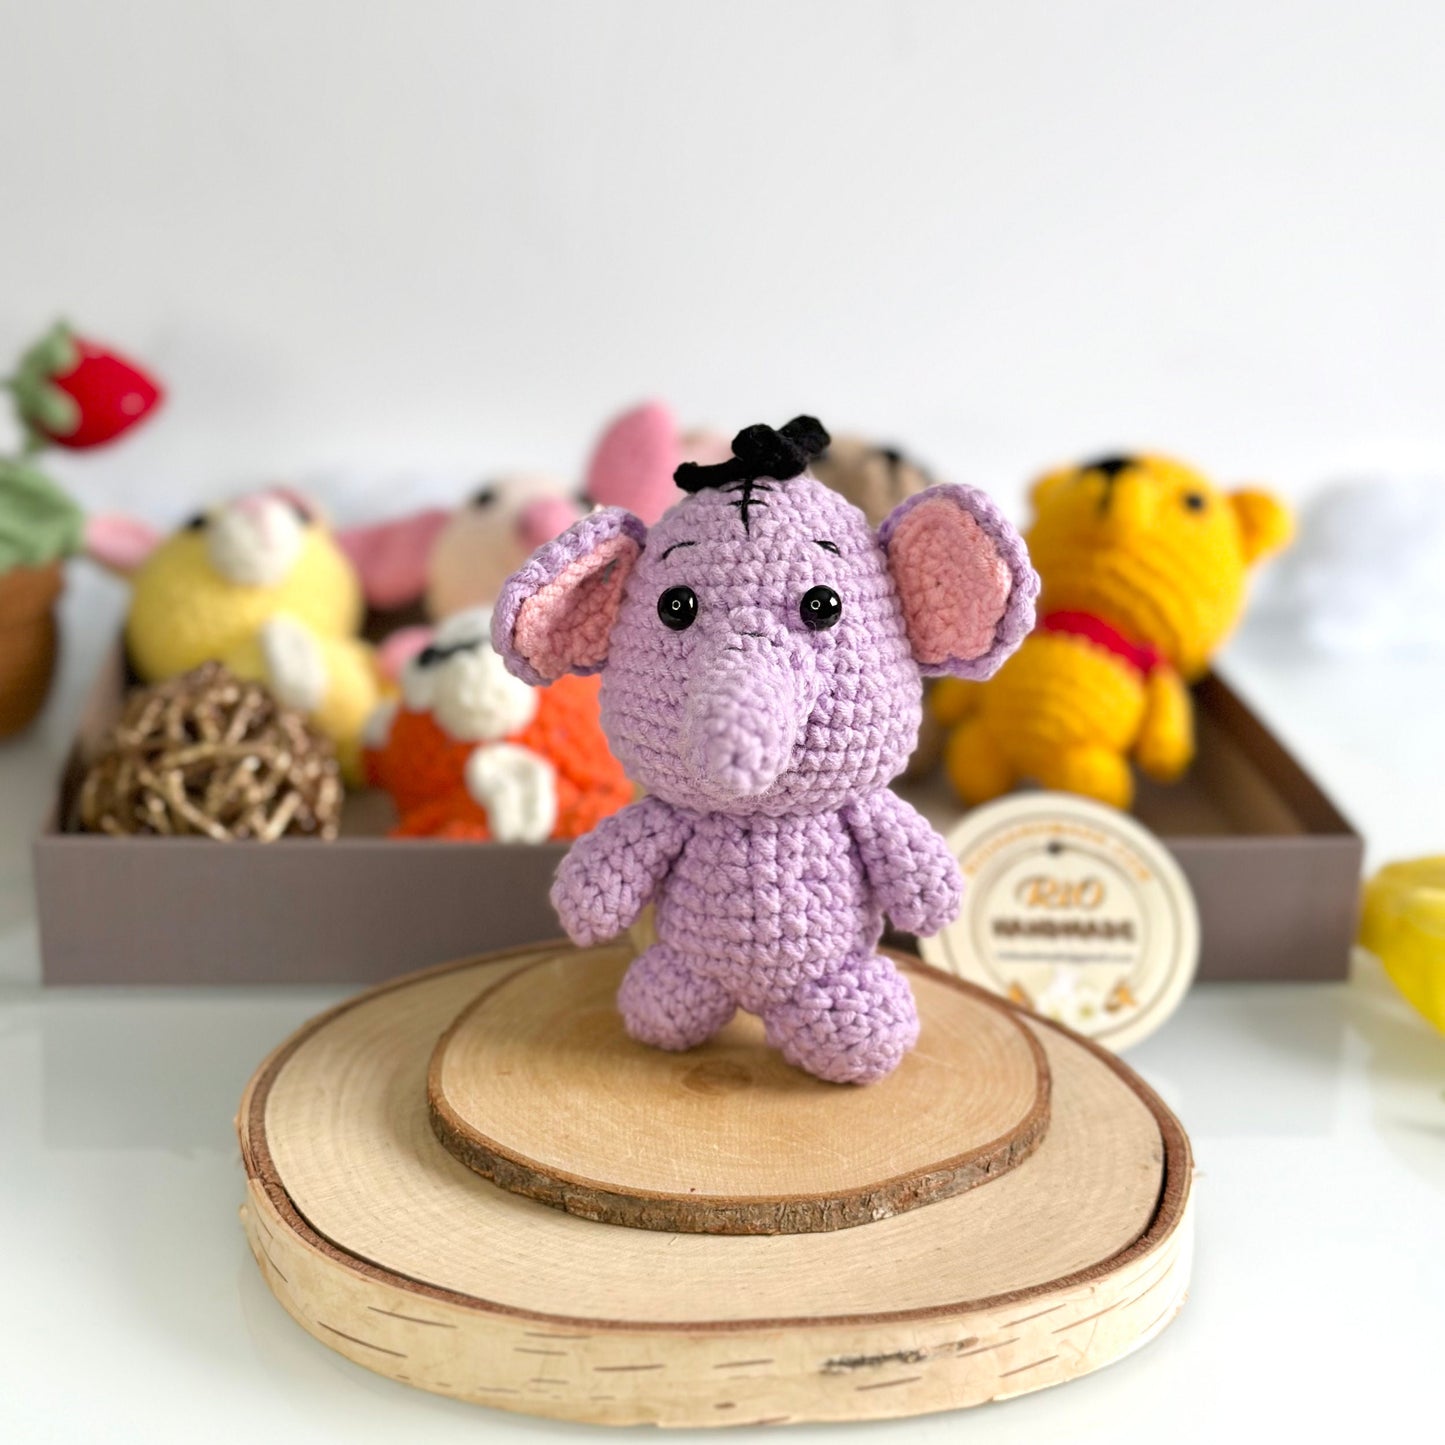 Handmade yarn cotton animal crochet, amigurumi Winnie the Pooh inspired stuffed, cute, soft toy for baby, toddler, kid, adult hobby,